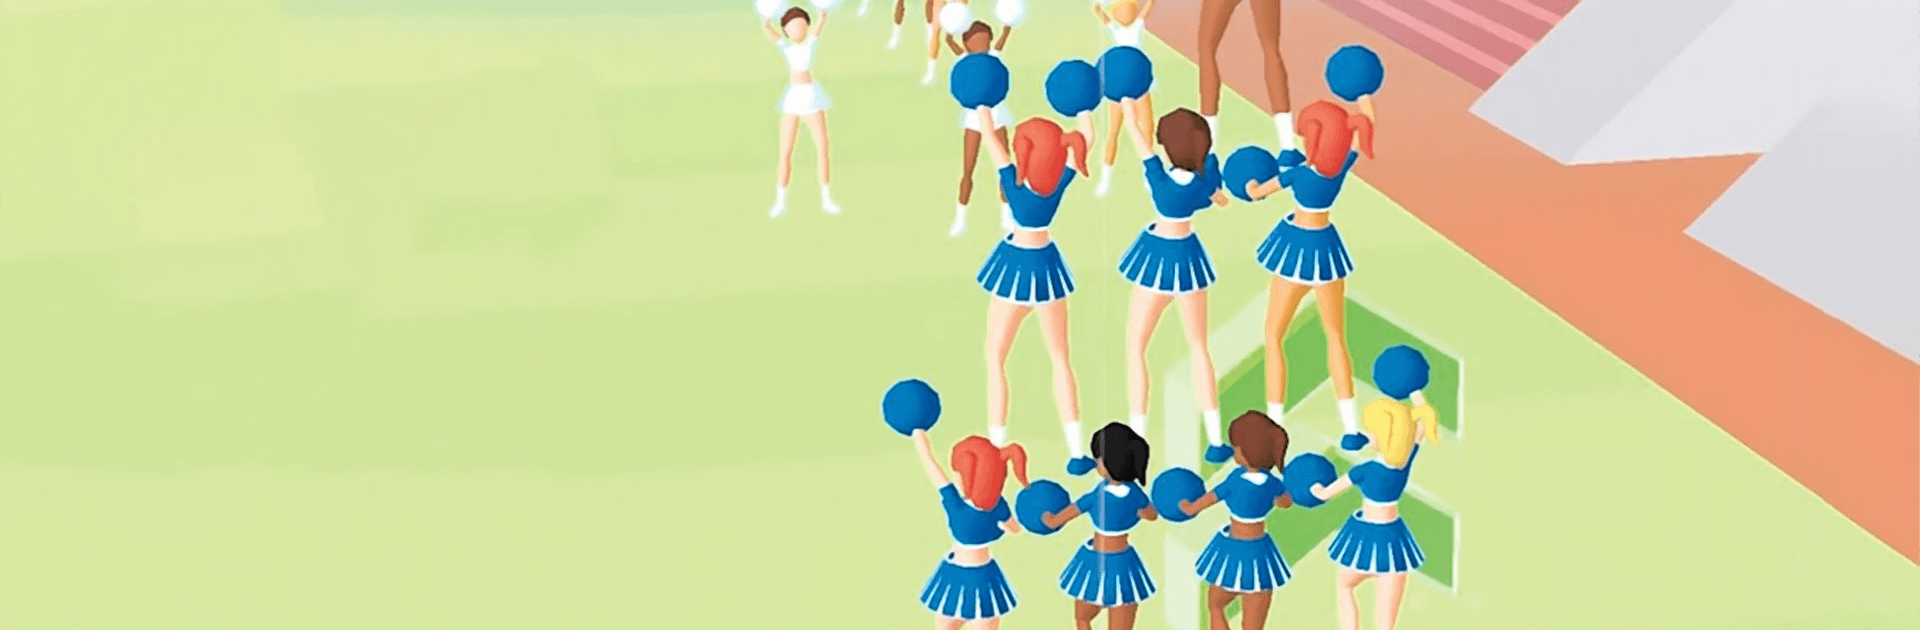 Cheerleader Run 3D